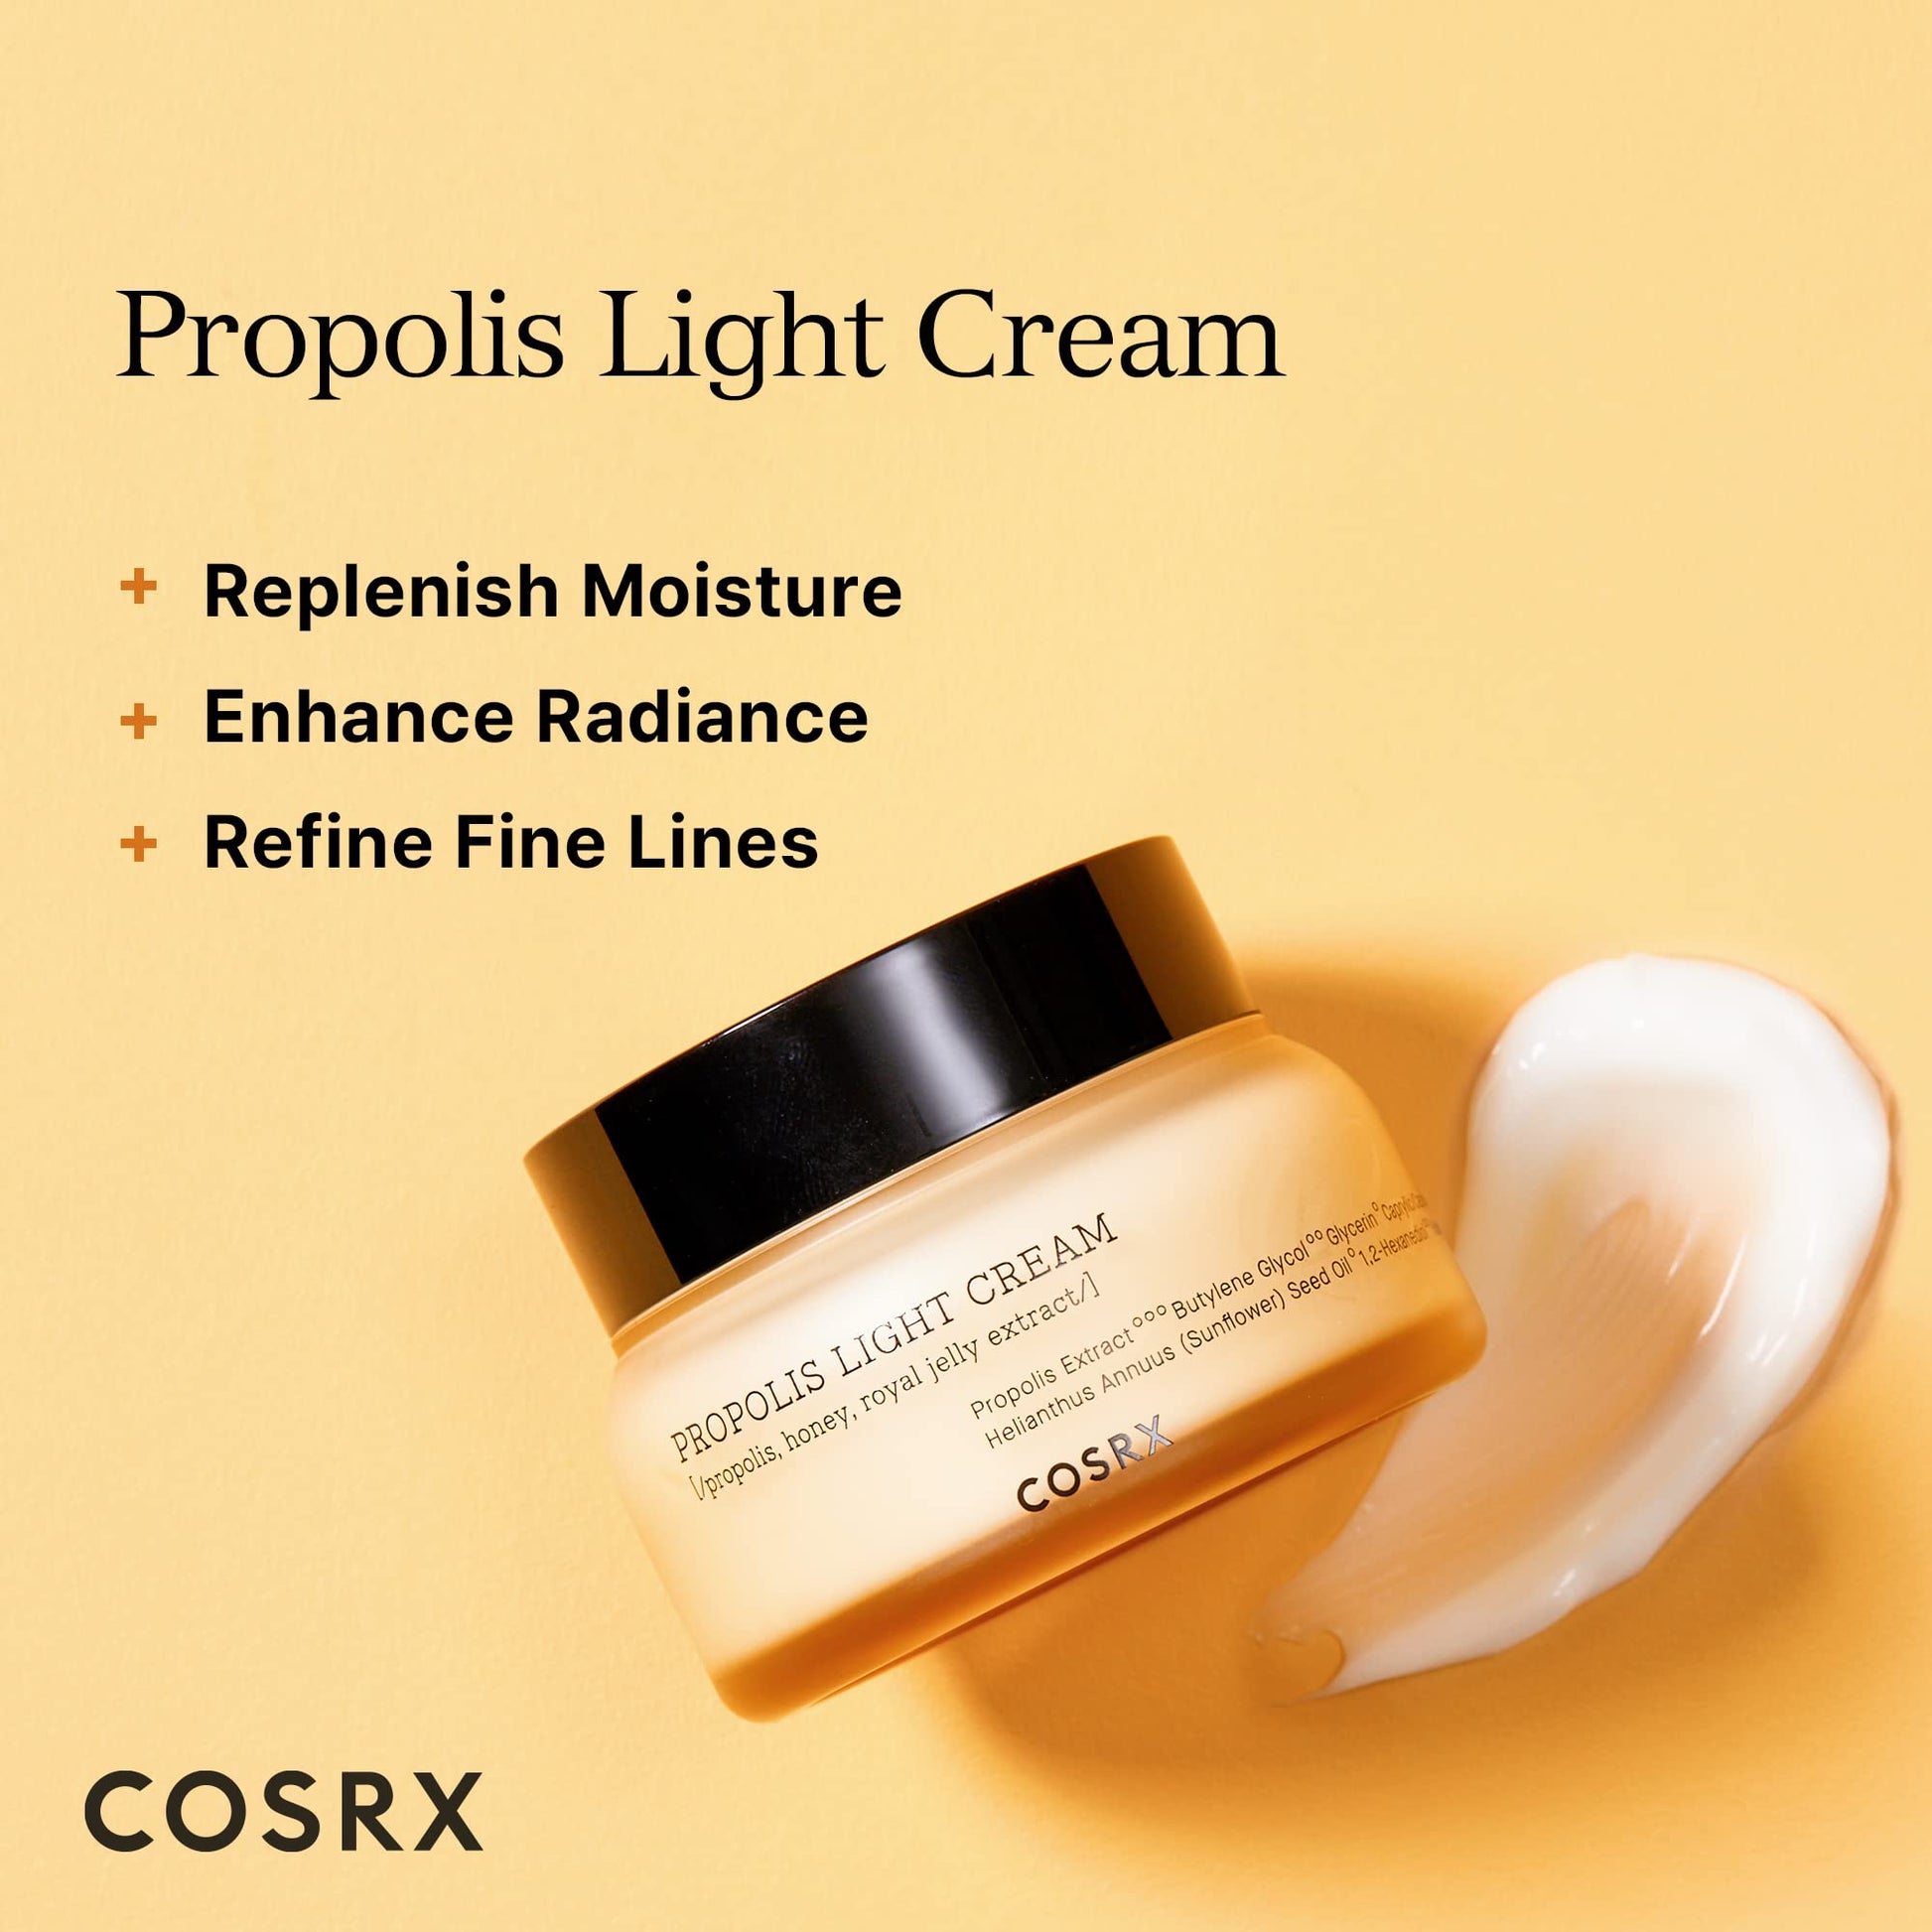 COSRX Propolis Light Cream from COSRX